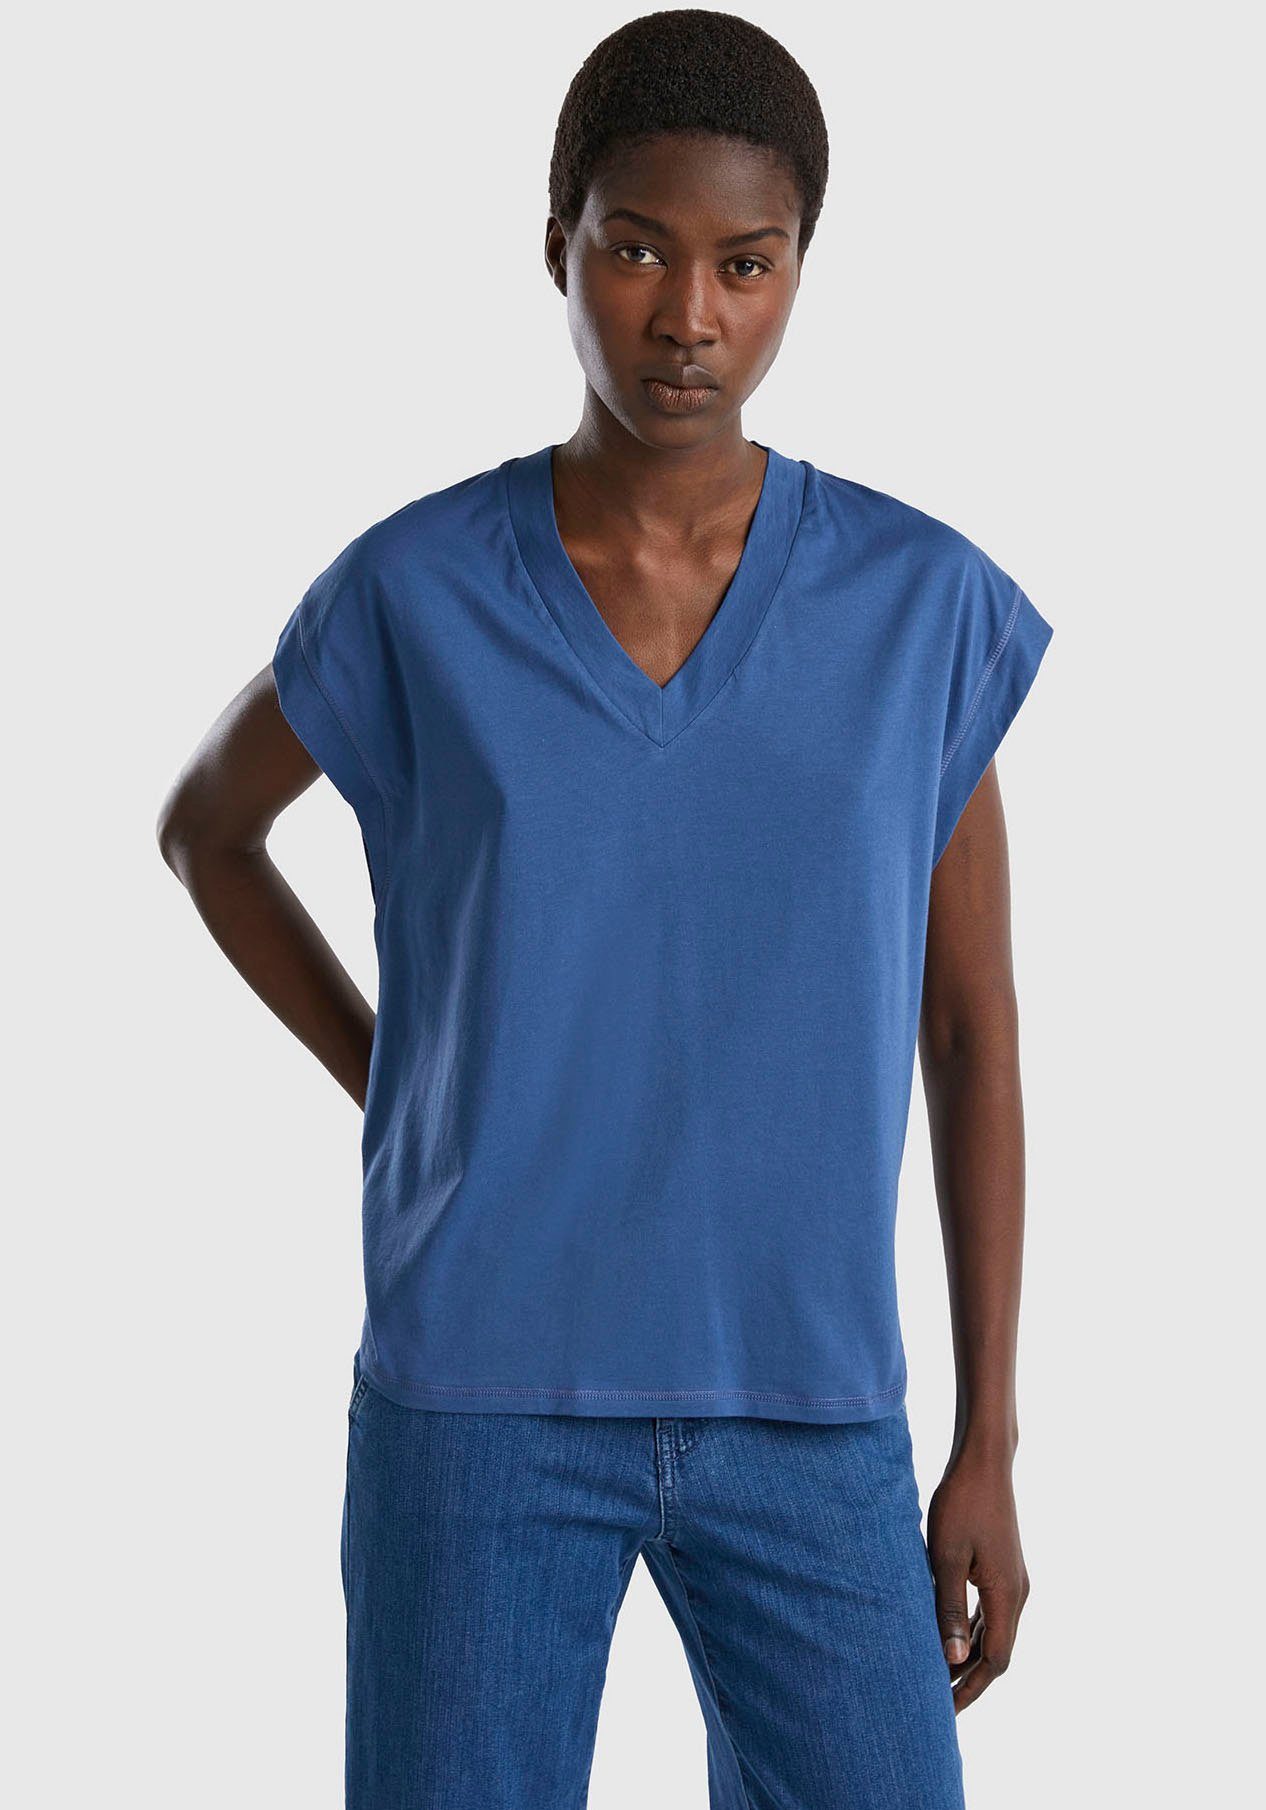 of Oversize-Passform Benetton kastiger Colors United in V-Shirt